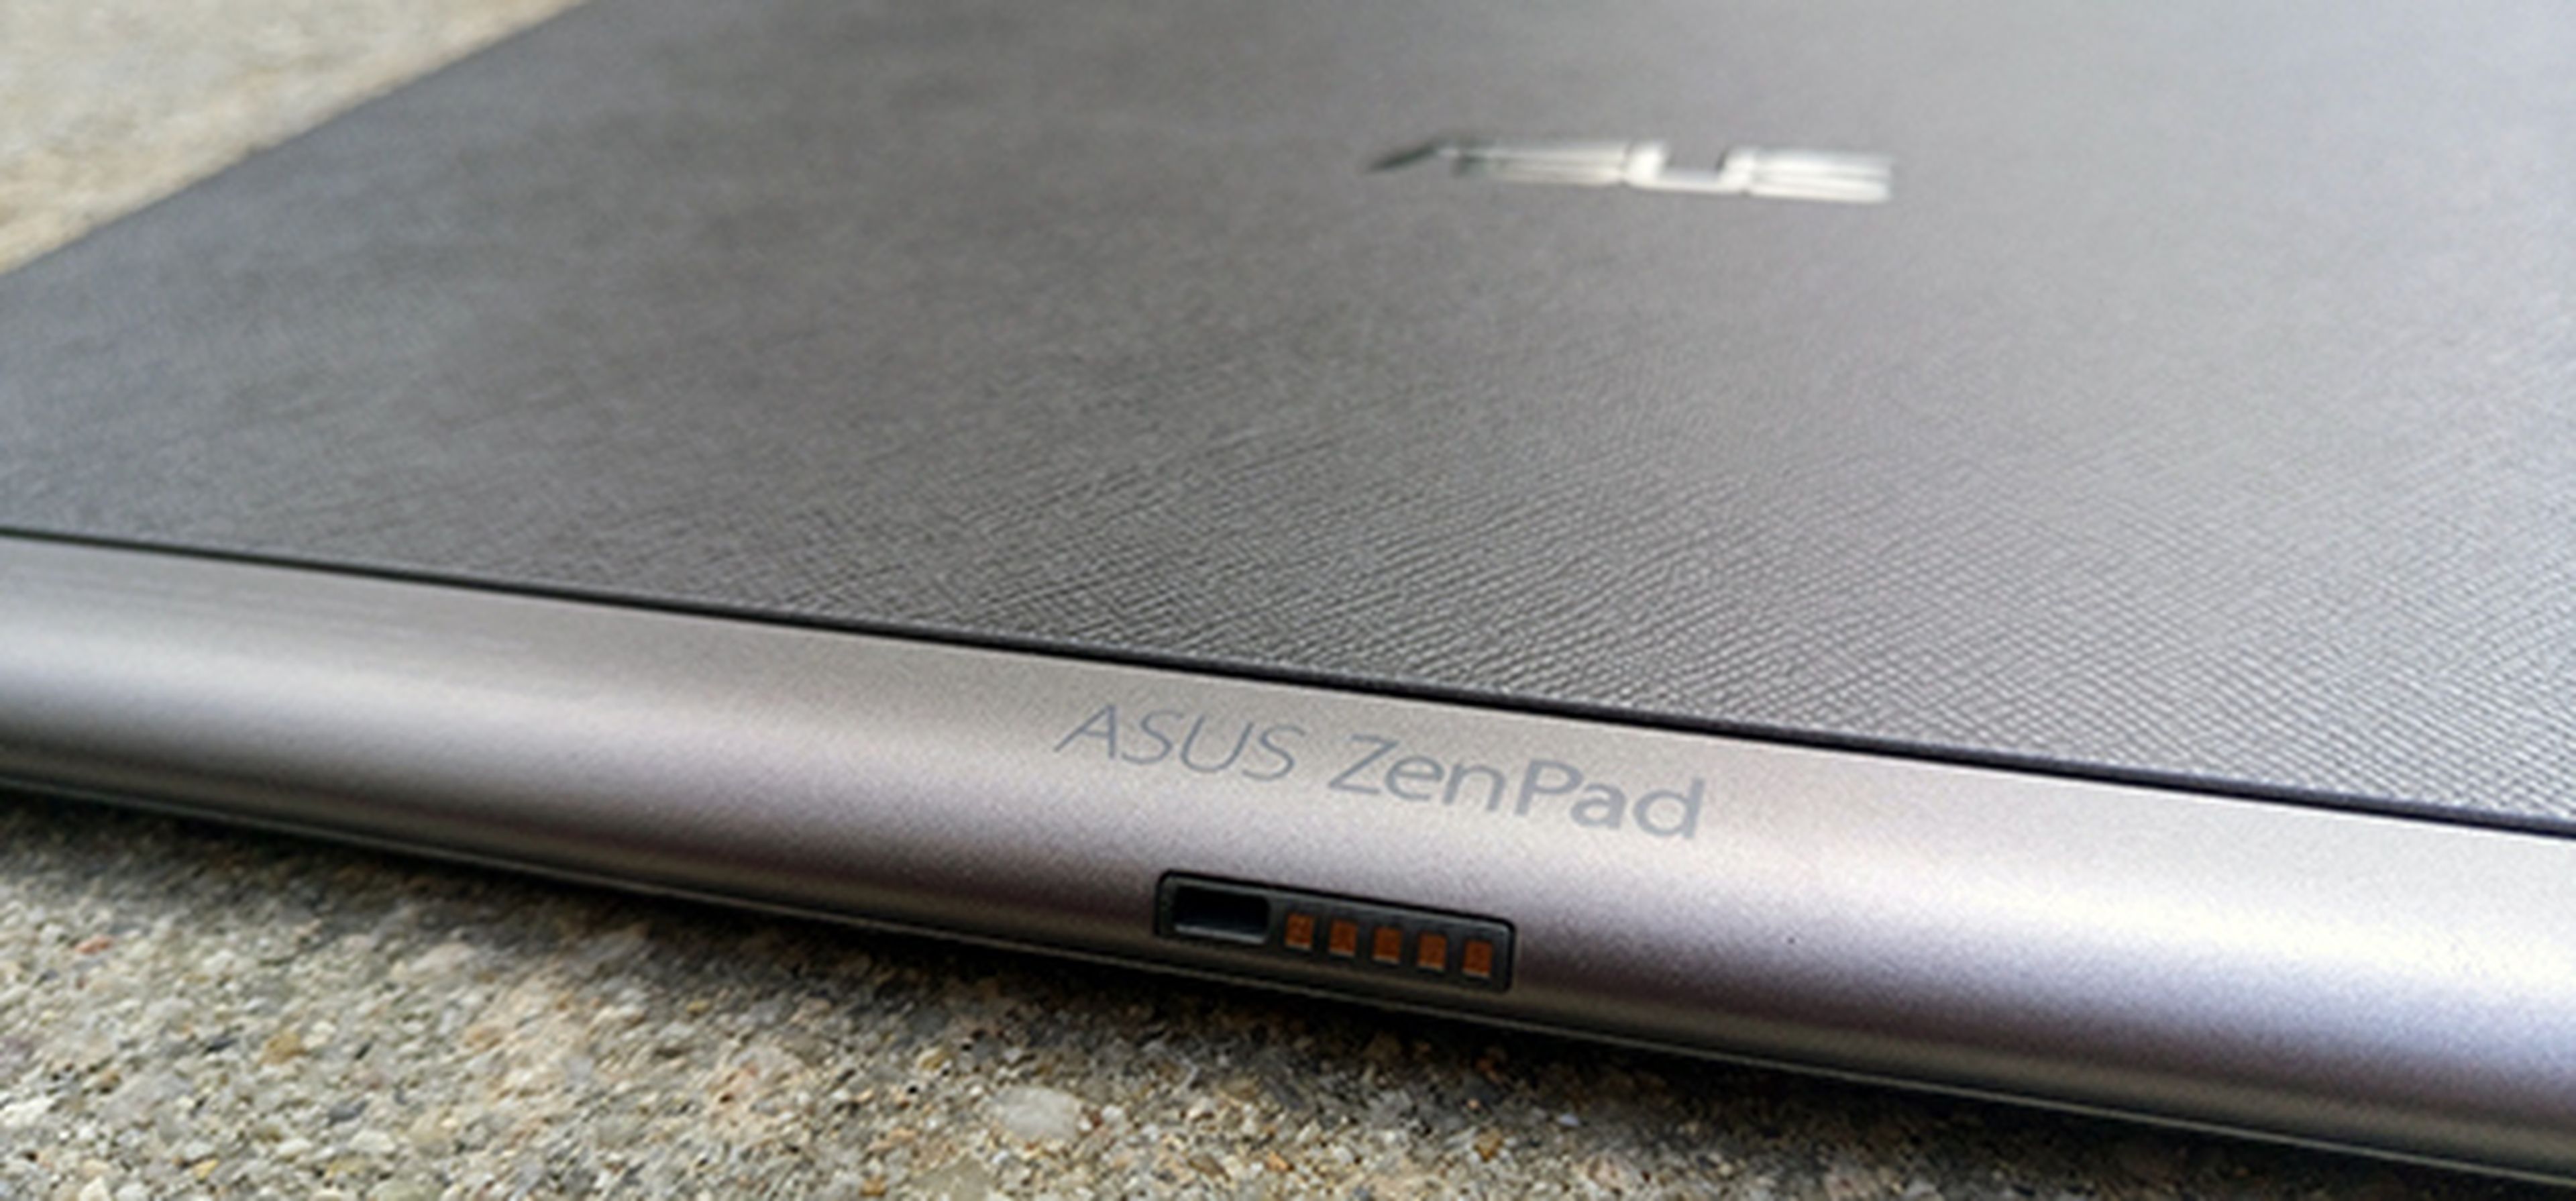 Base asus ZenPad